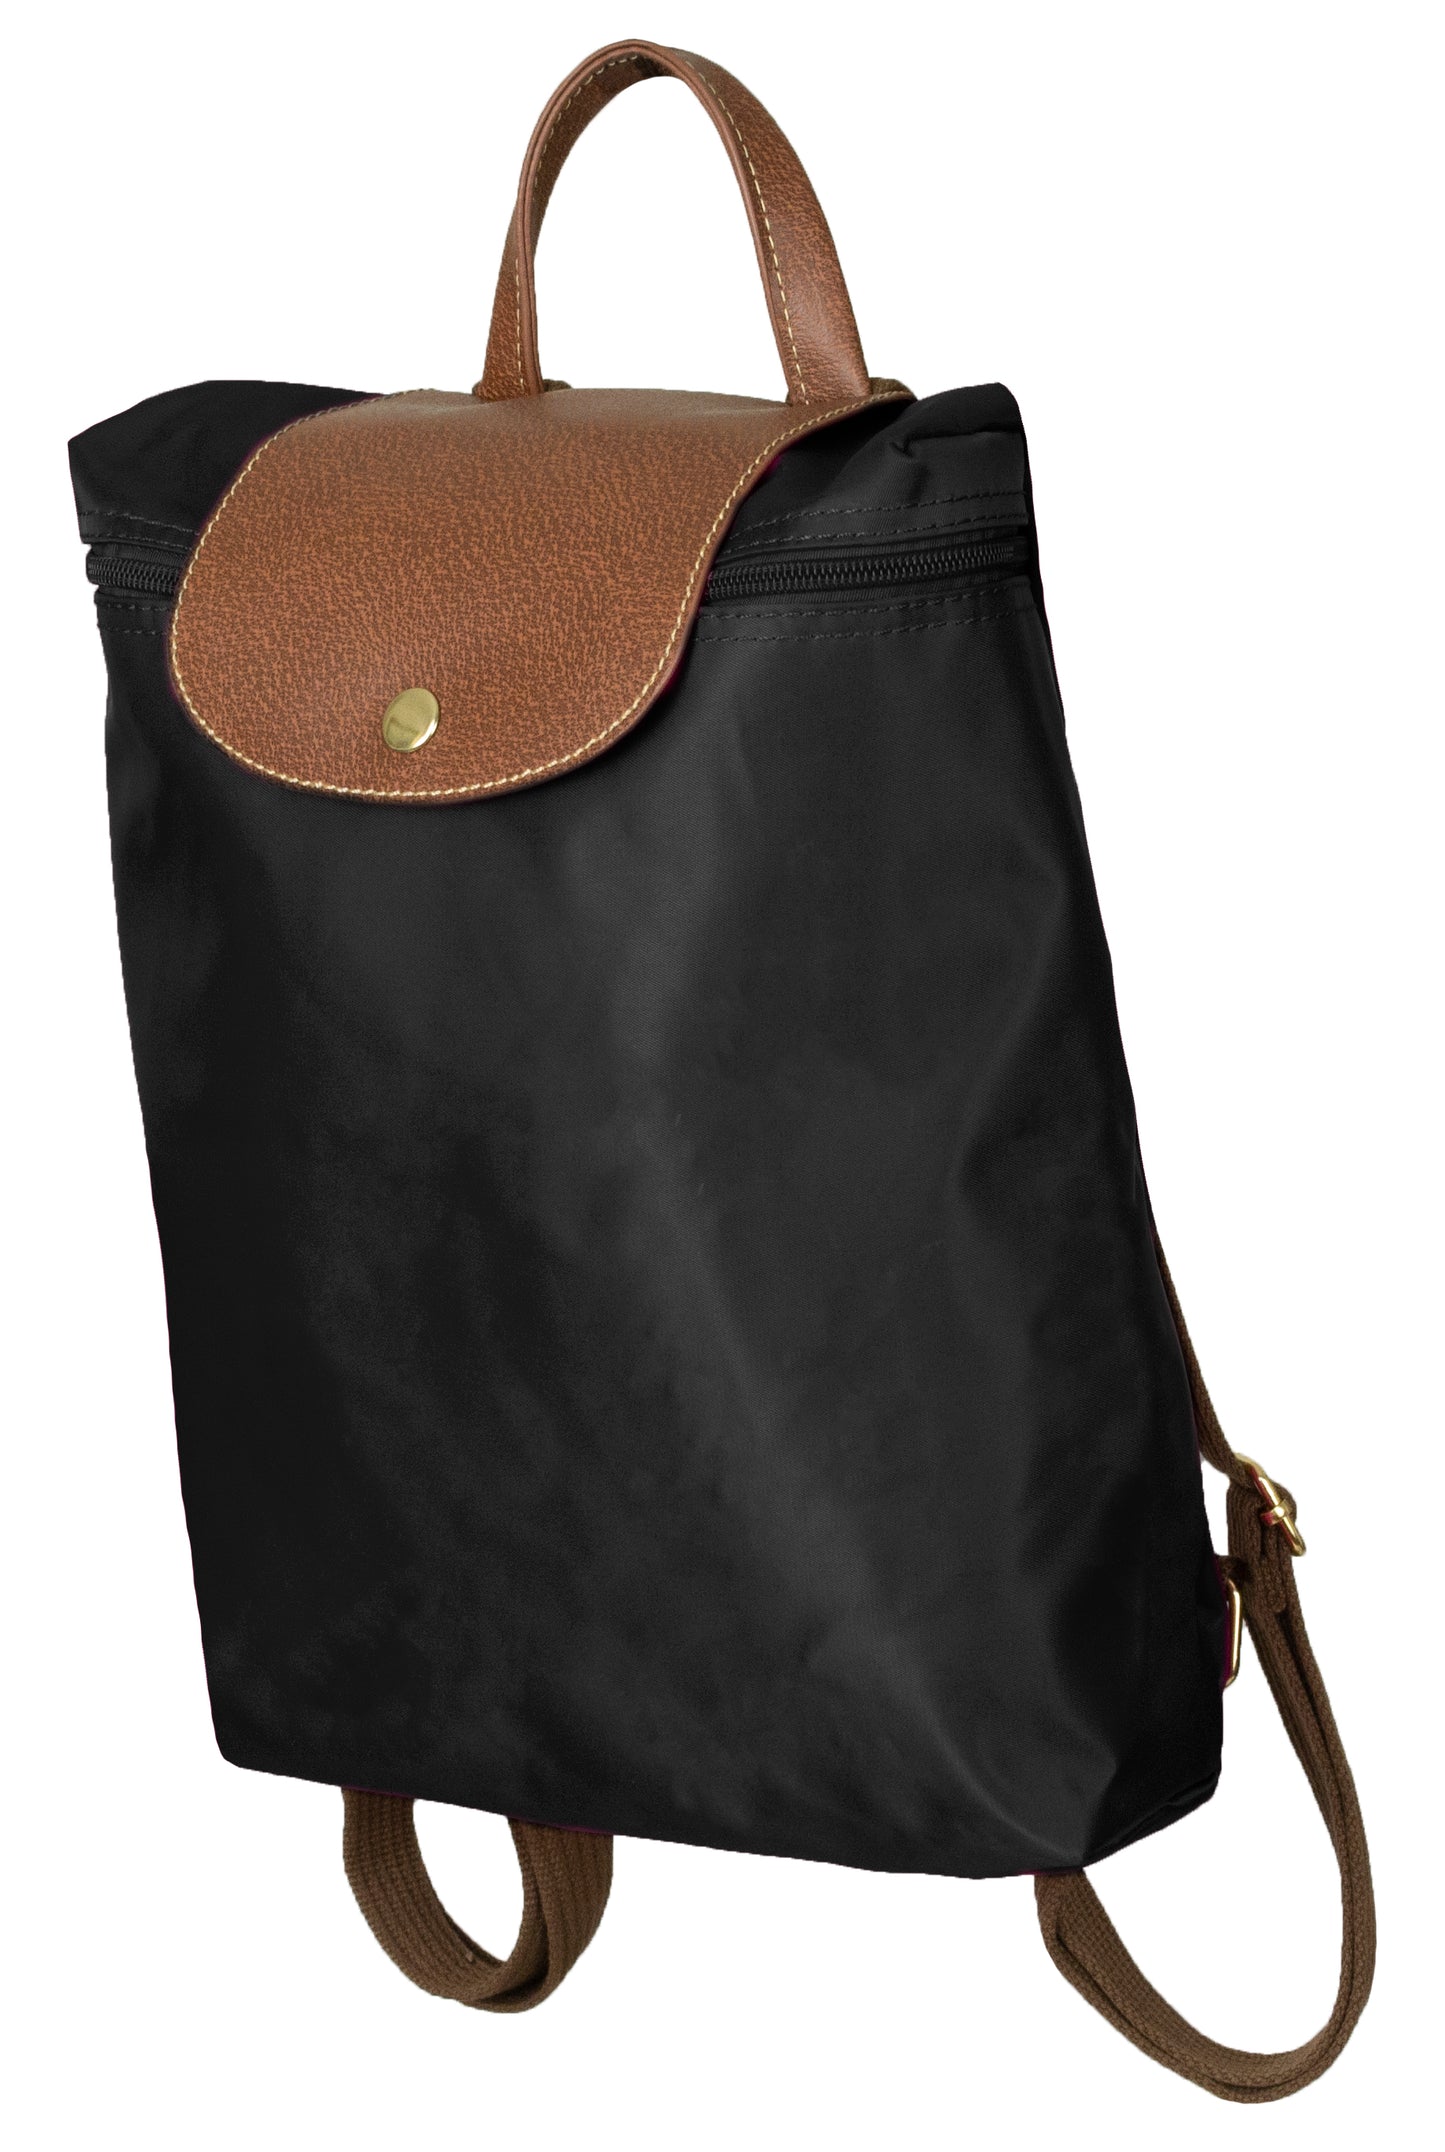 Foldable Lightweight Backpack